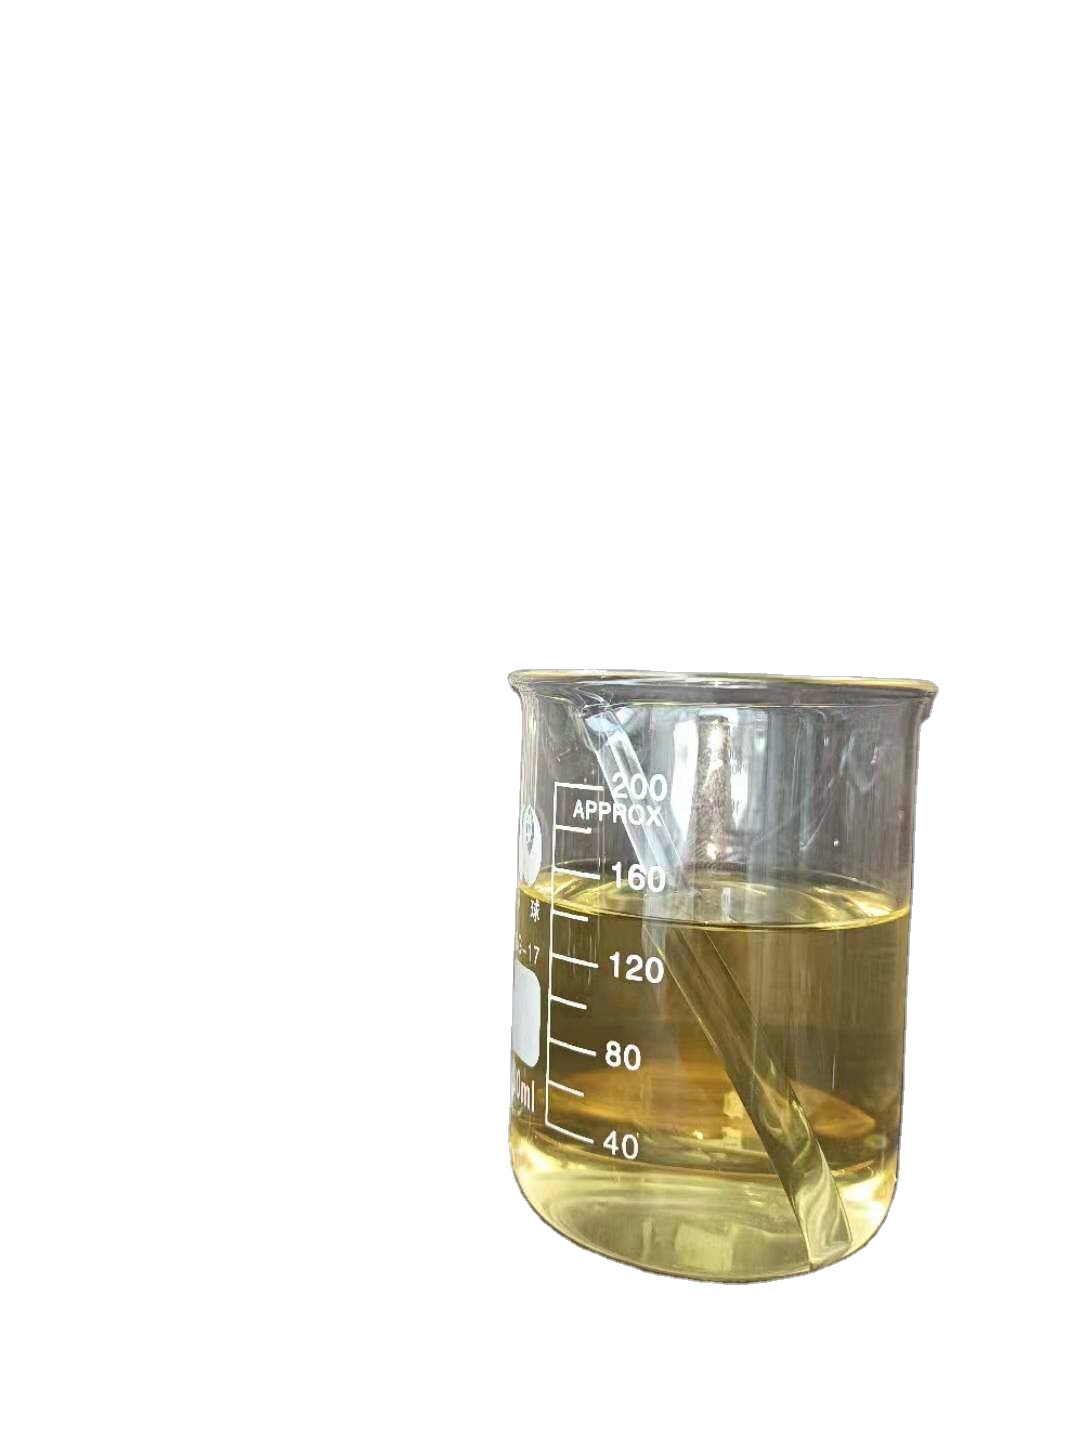 Ethoxylated hydrogenated castor oil